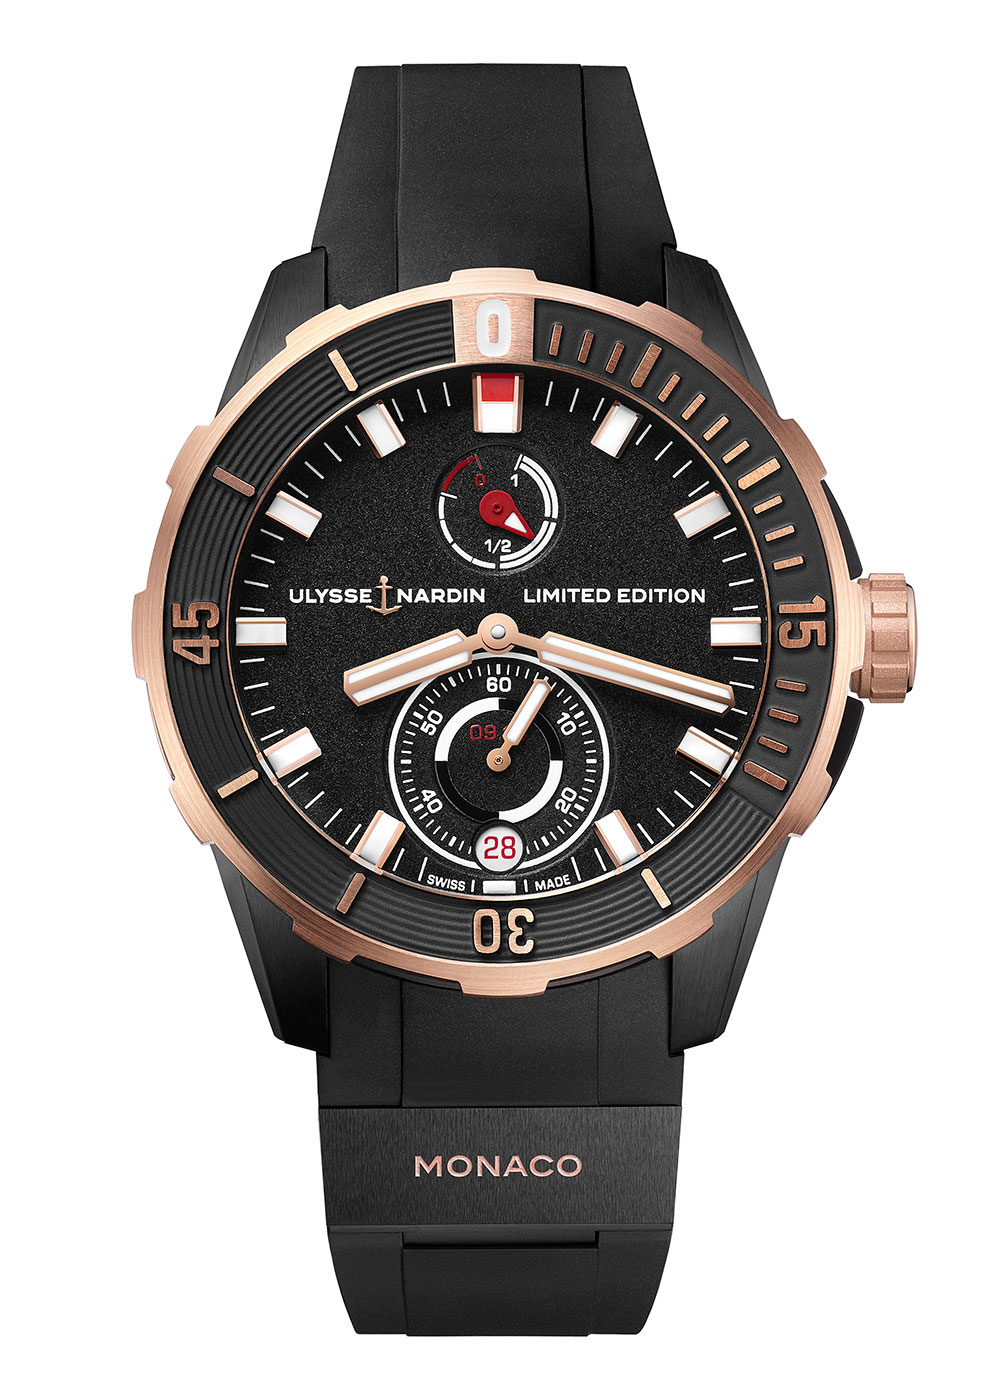 Reloj de buceo Diver Chronometer Monaco Limited Edition de Ulysse Nardin